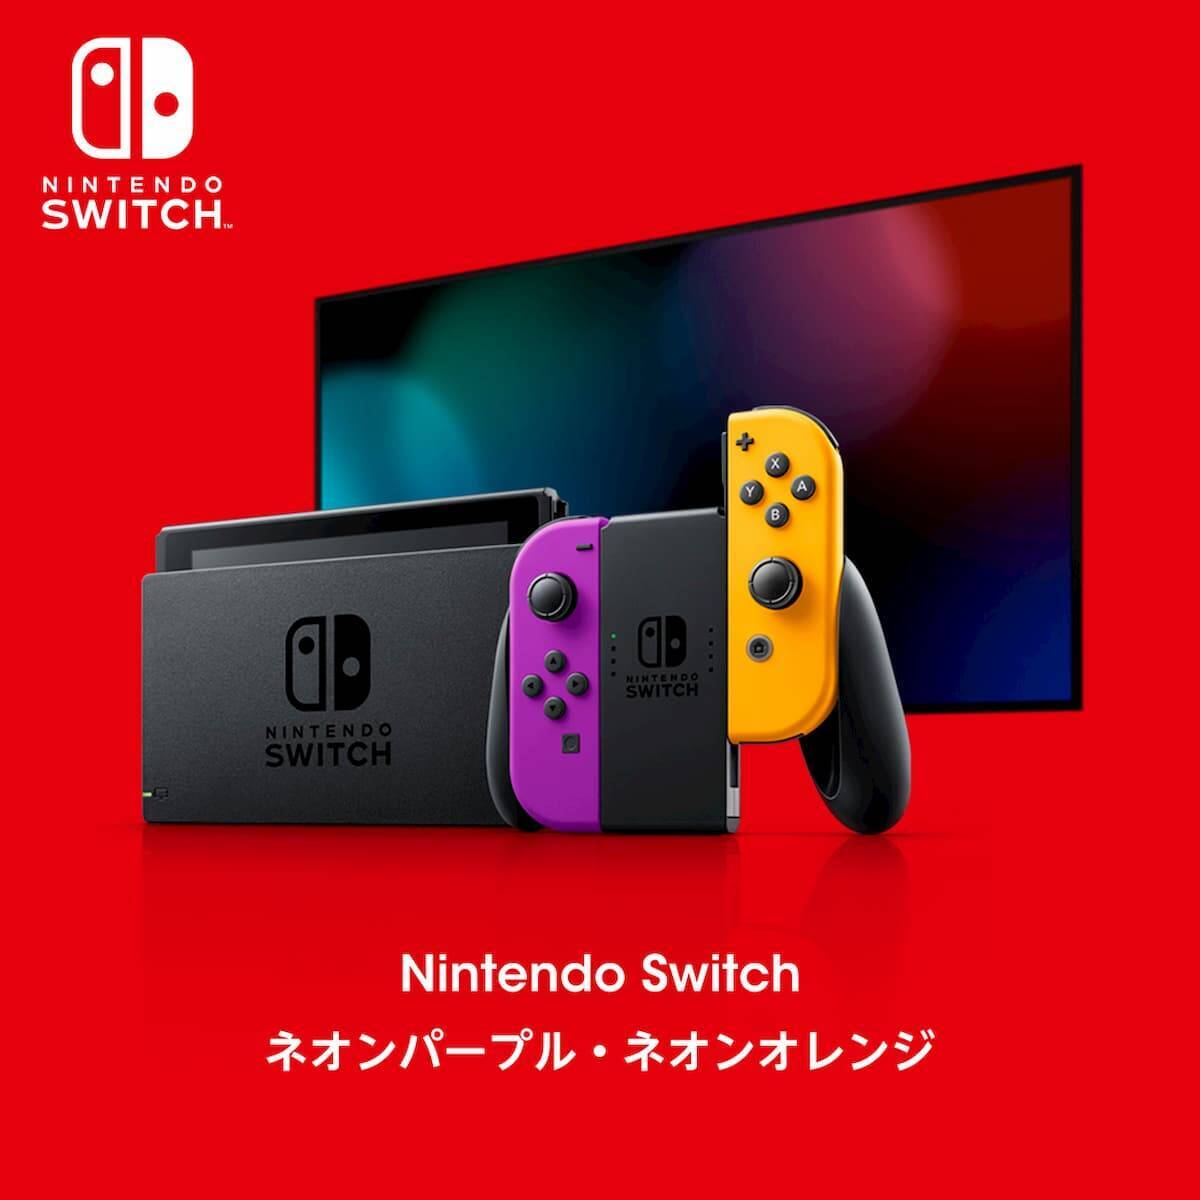 Nintendo Tokyoで Nintendo Switch ネオンパープル ネオンオレンジ のweb限定抽選予約受付中 年11月17日 エキサイトニュース